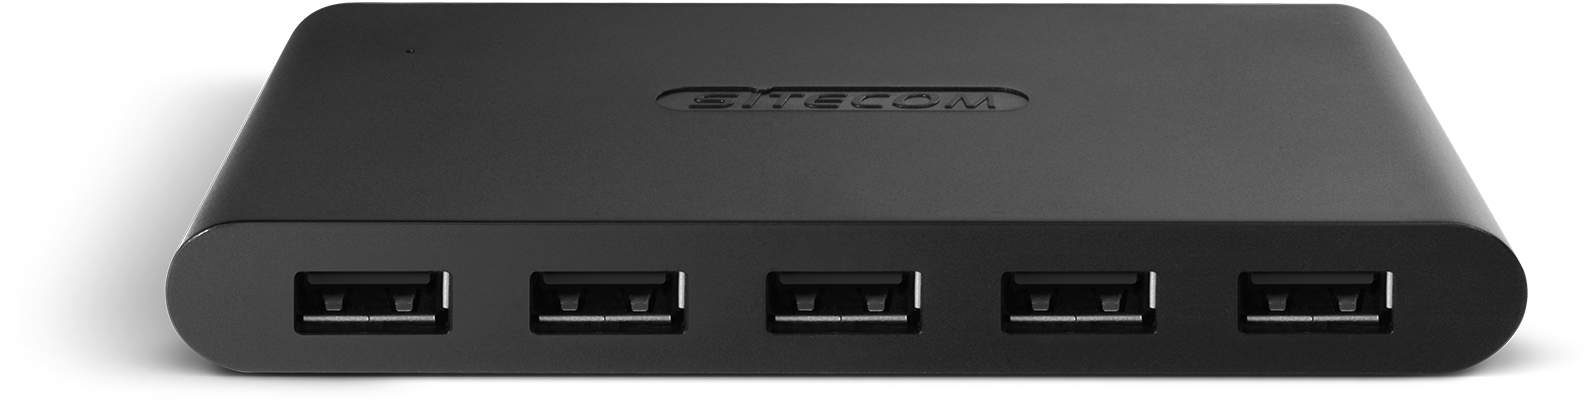 SITECOM USB 2.0 Hub 7 Port CN-082 Incl. Power adapter